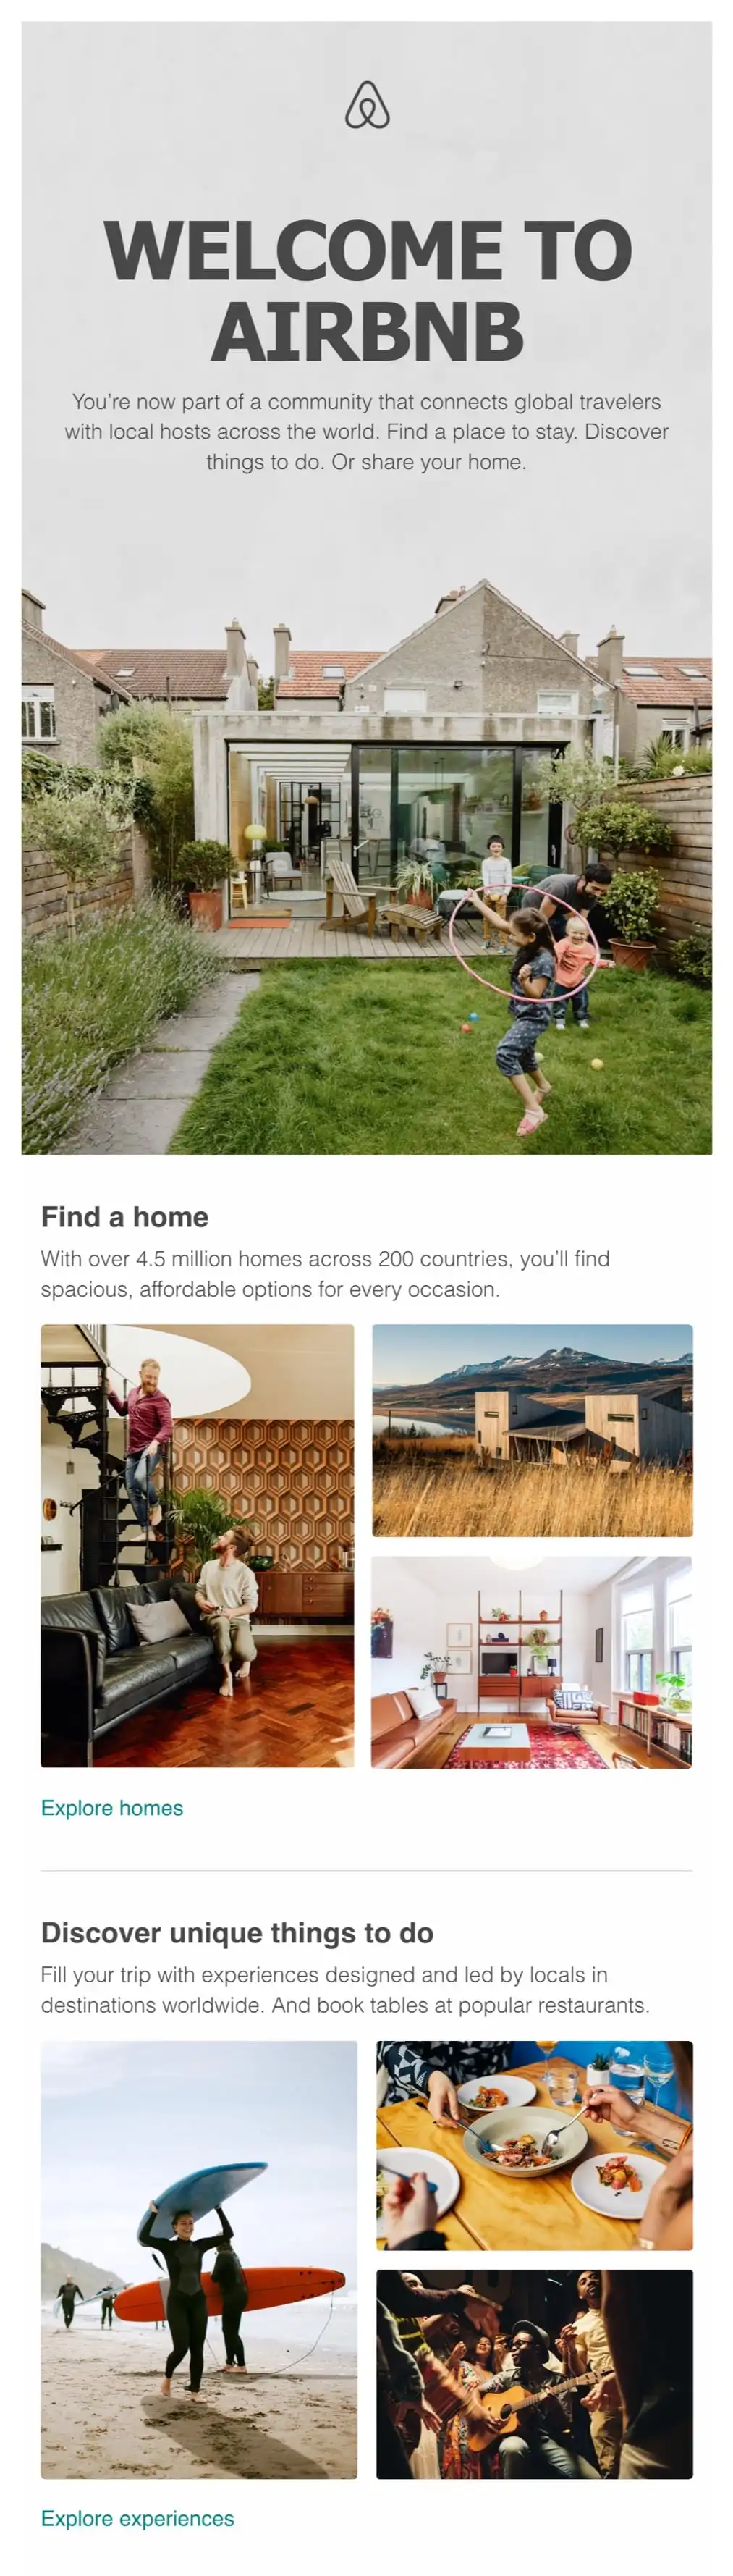 bienvenue-email-exemple-airbnb